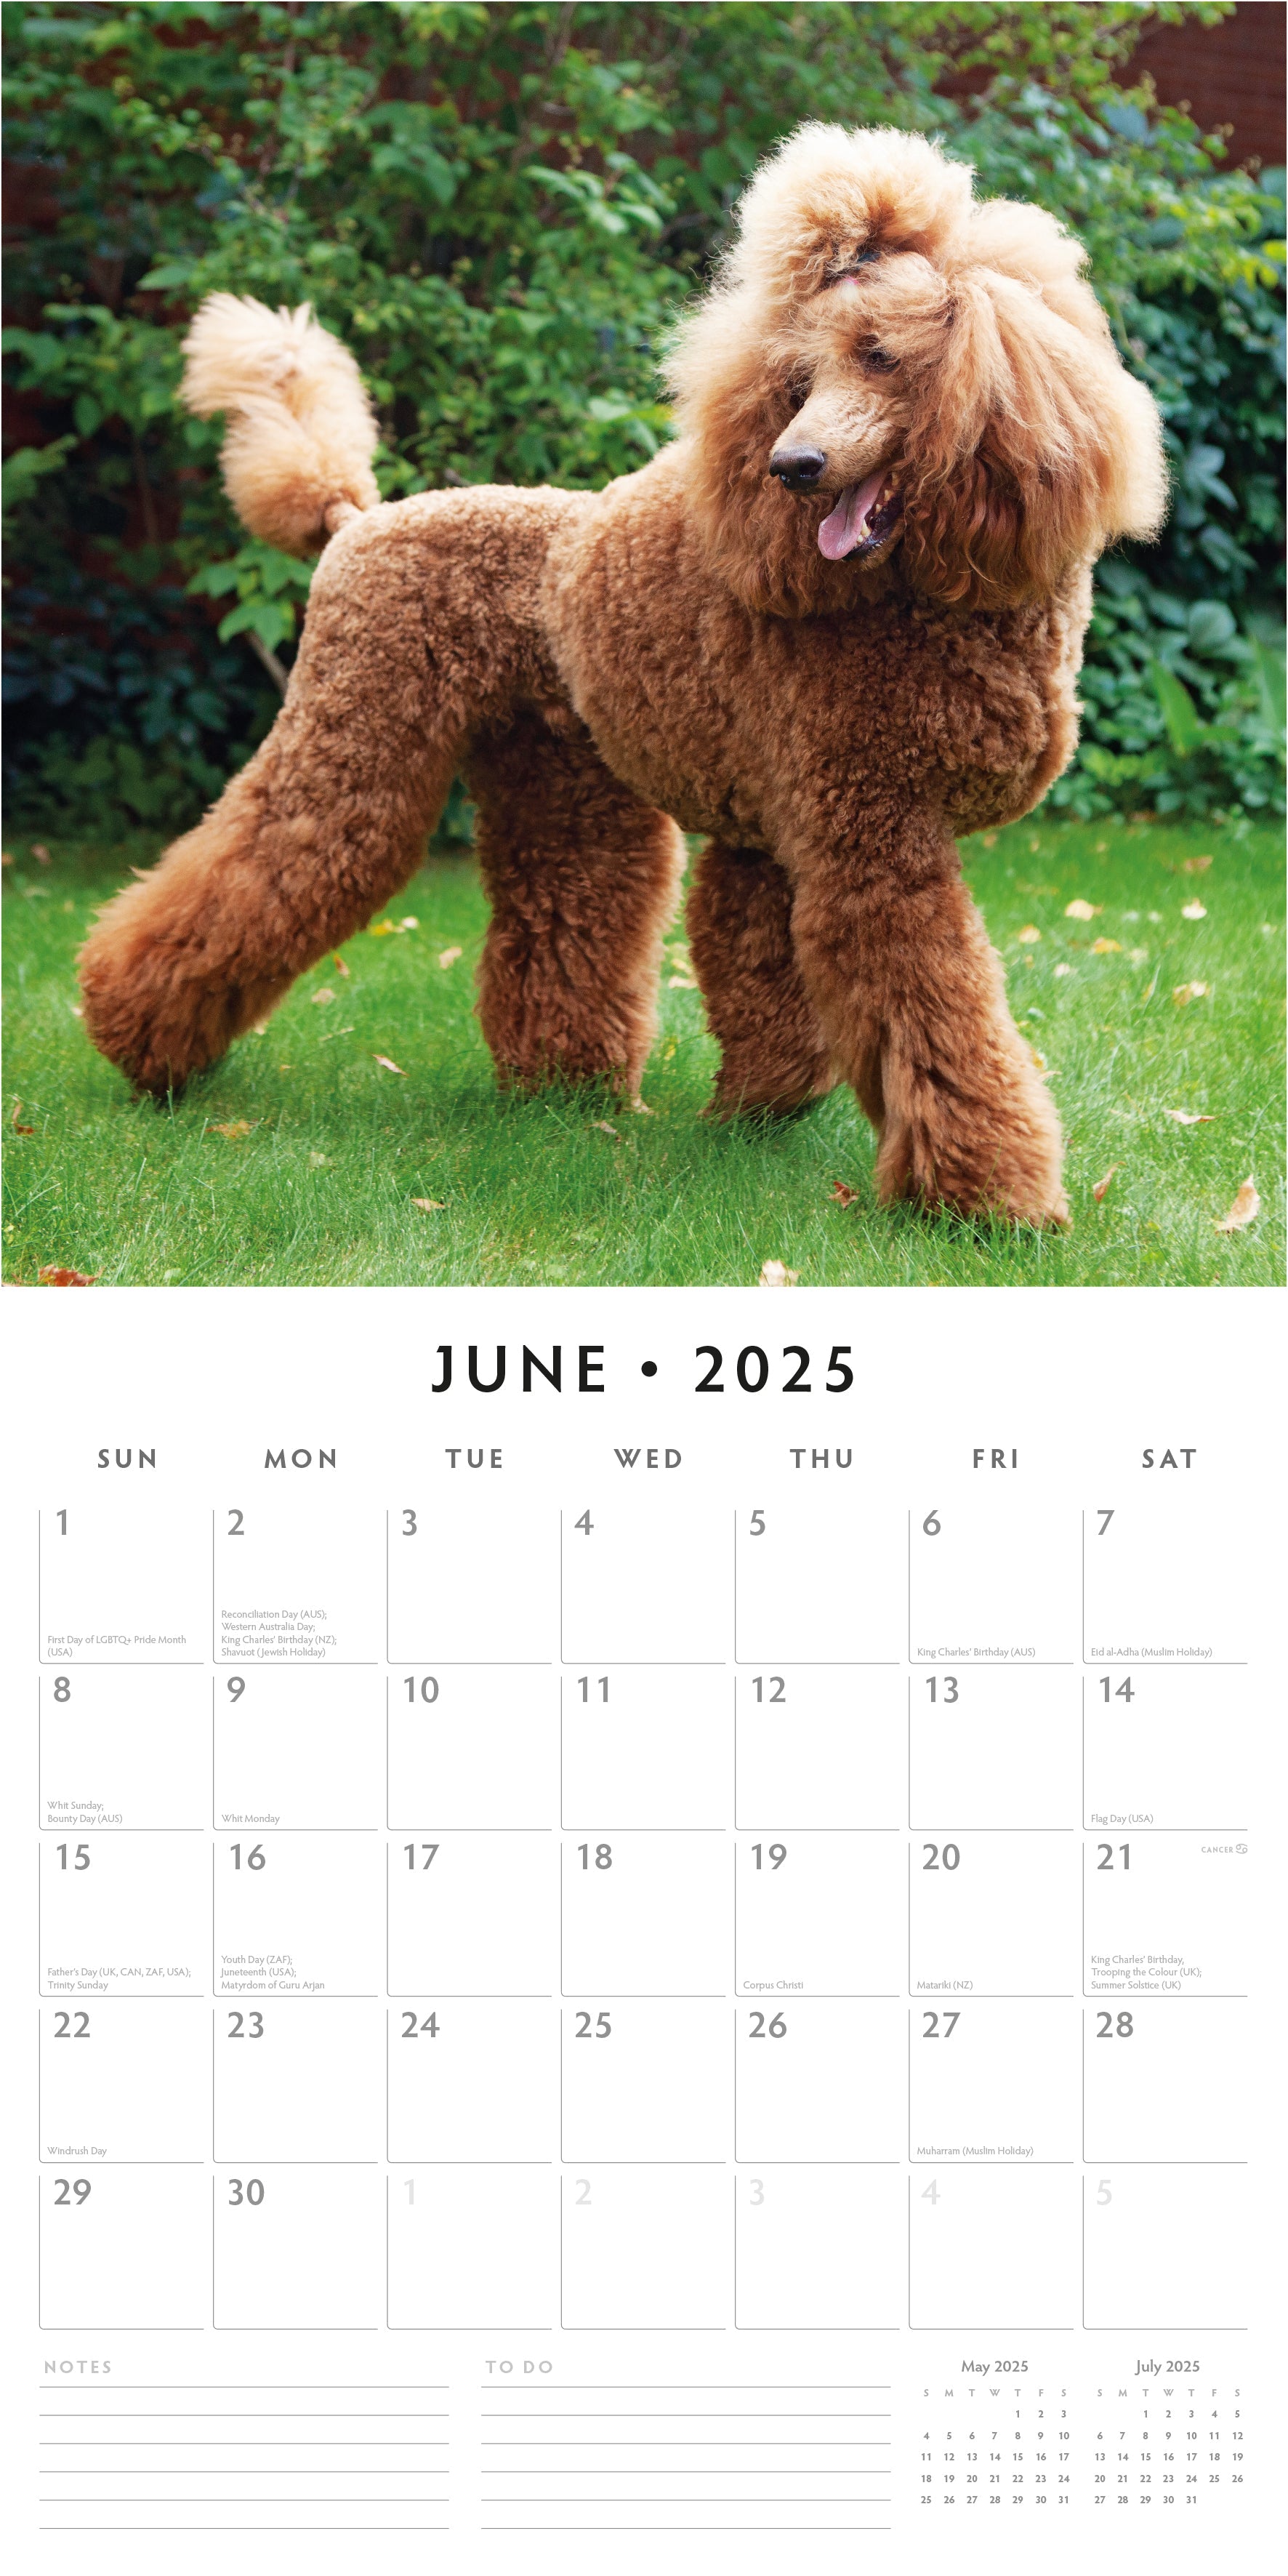 2025 Poodles - Square Wall Calendar